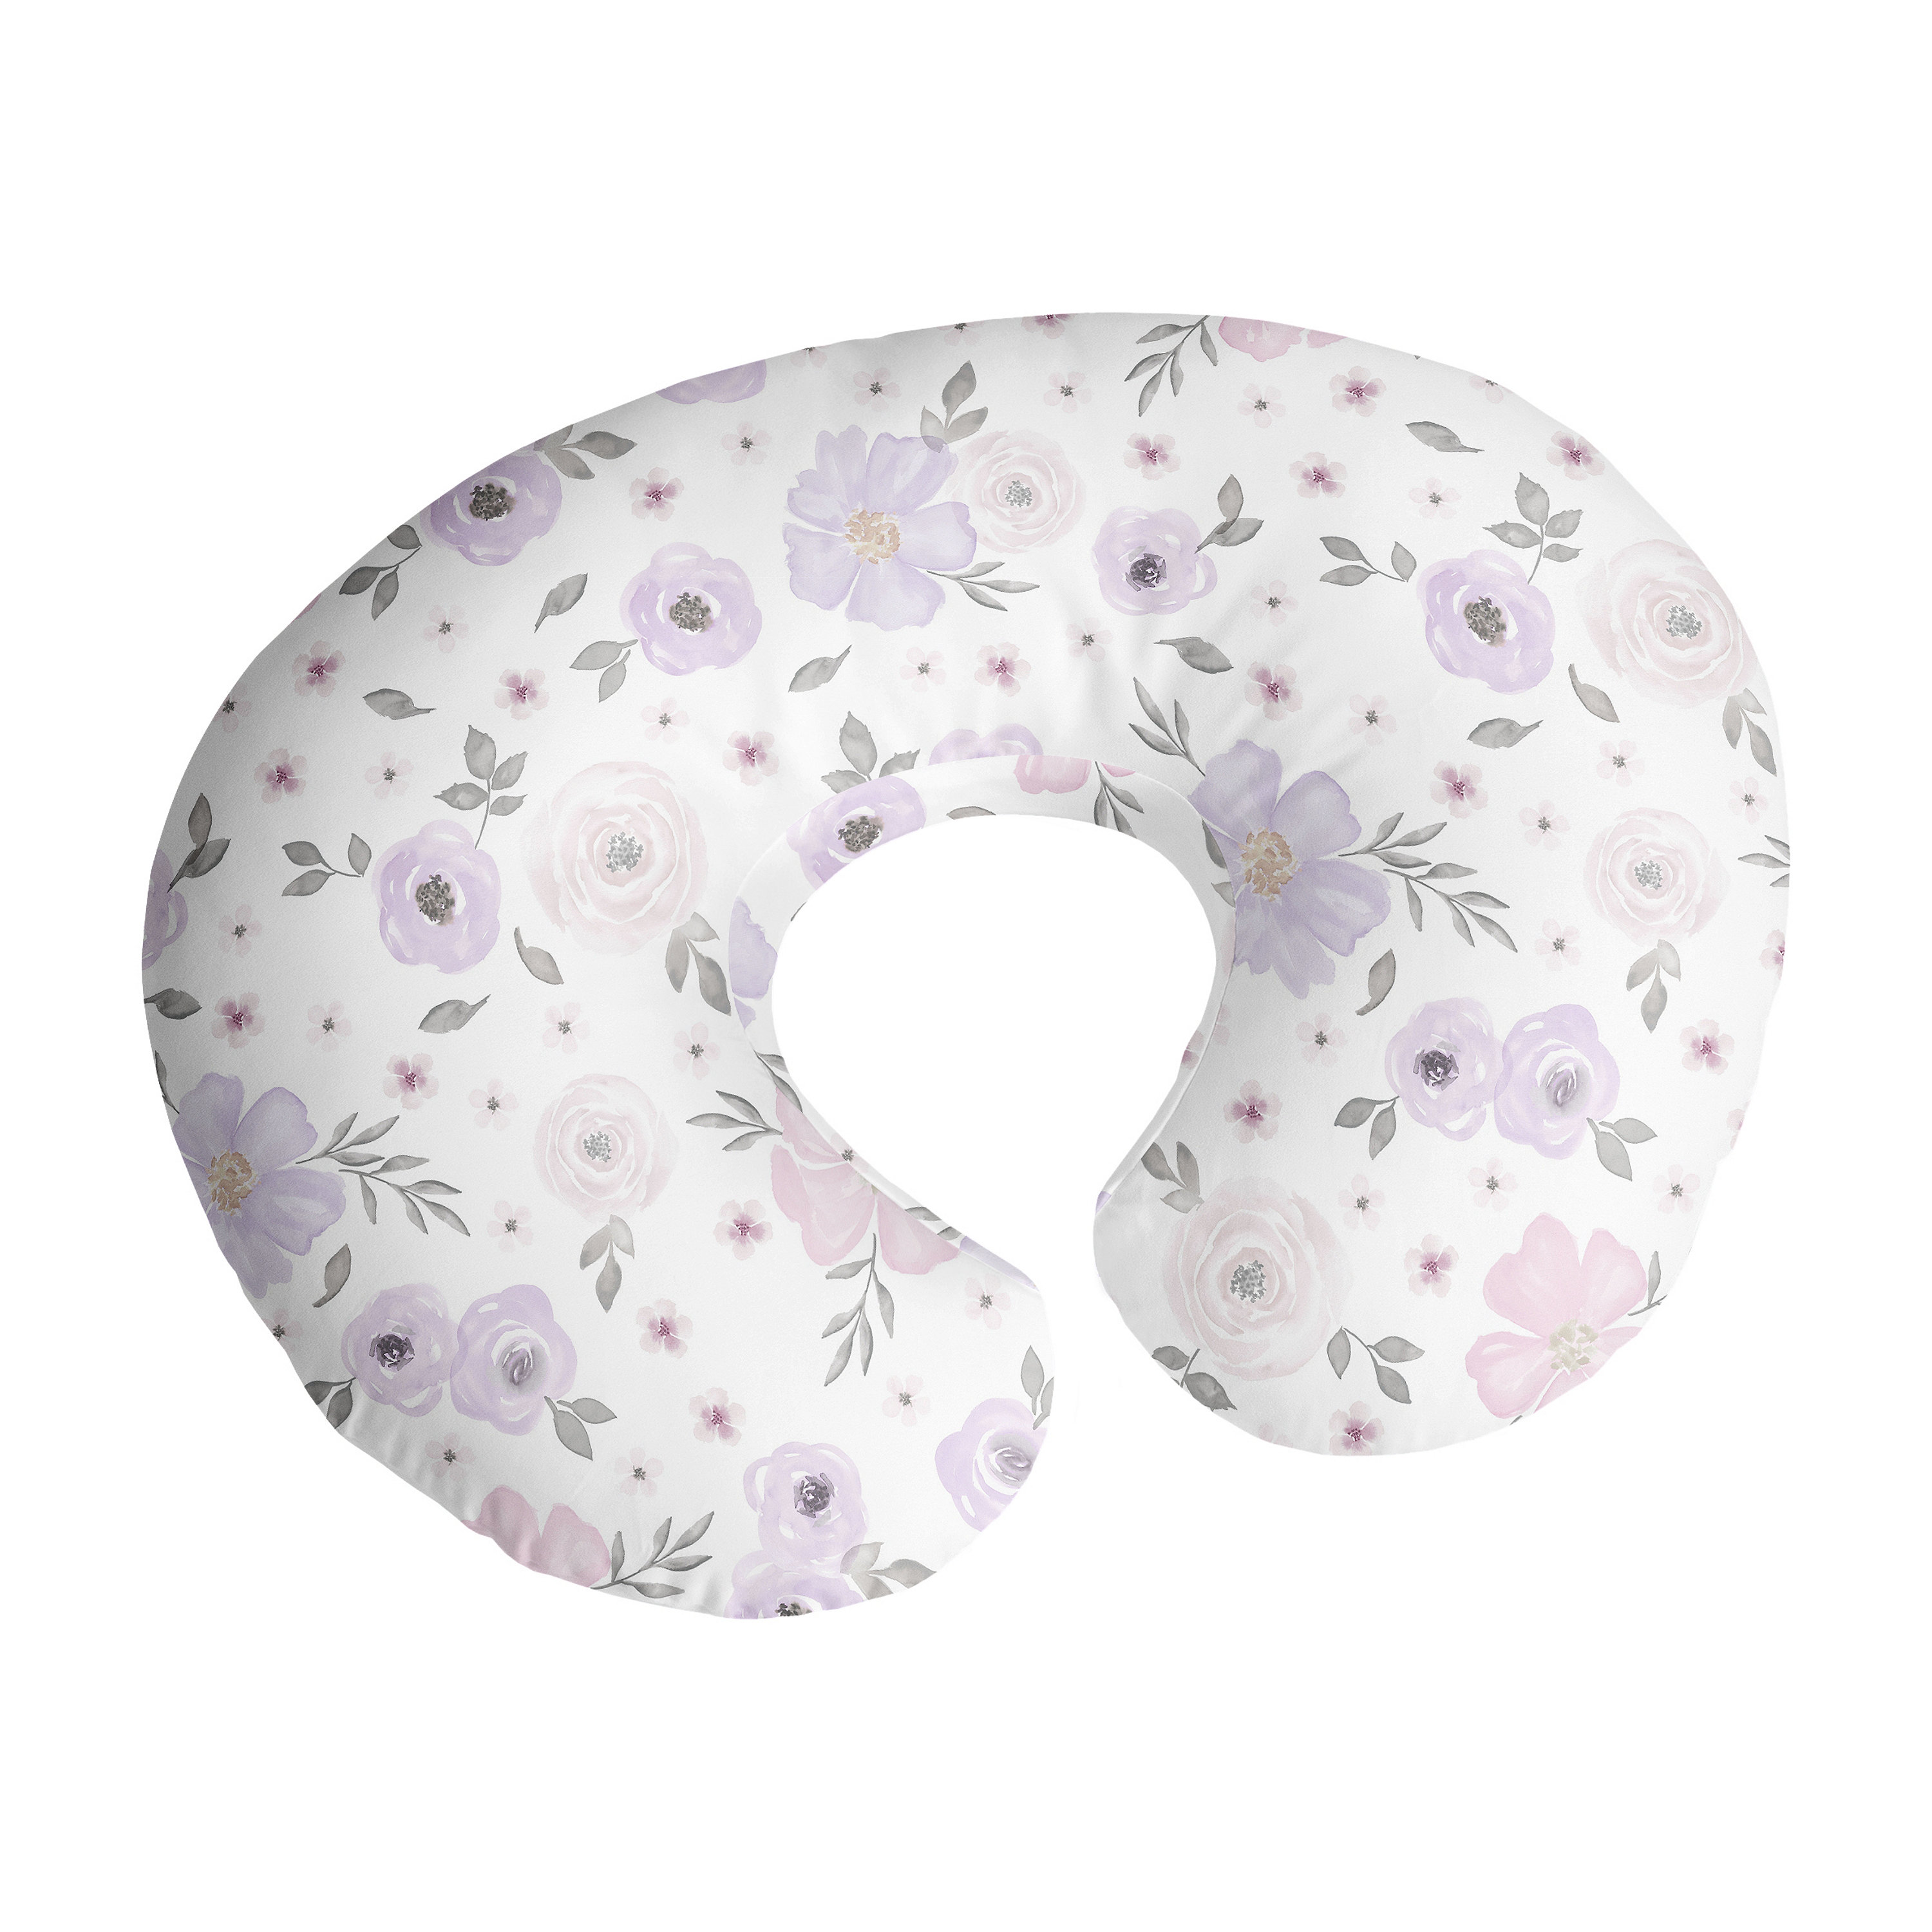 Nursing Pillow, Breast Feeding Pillows for Mom, Rose Floral Print